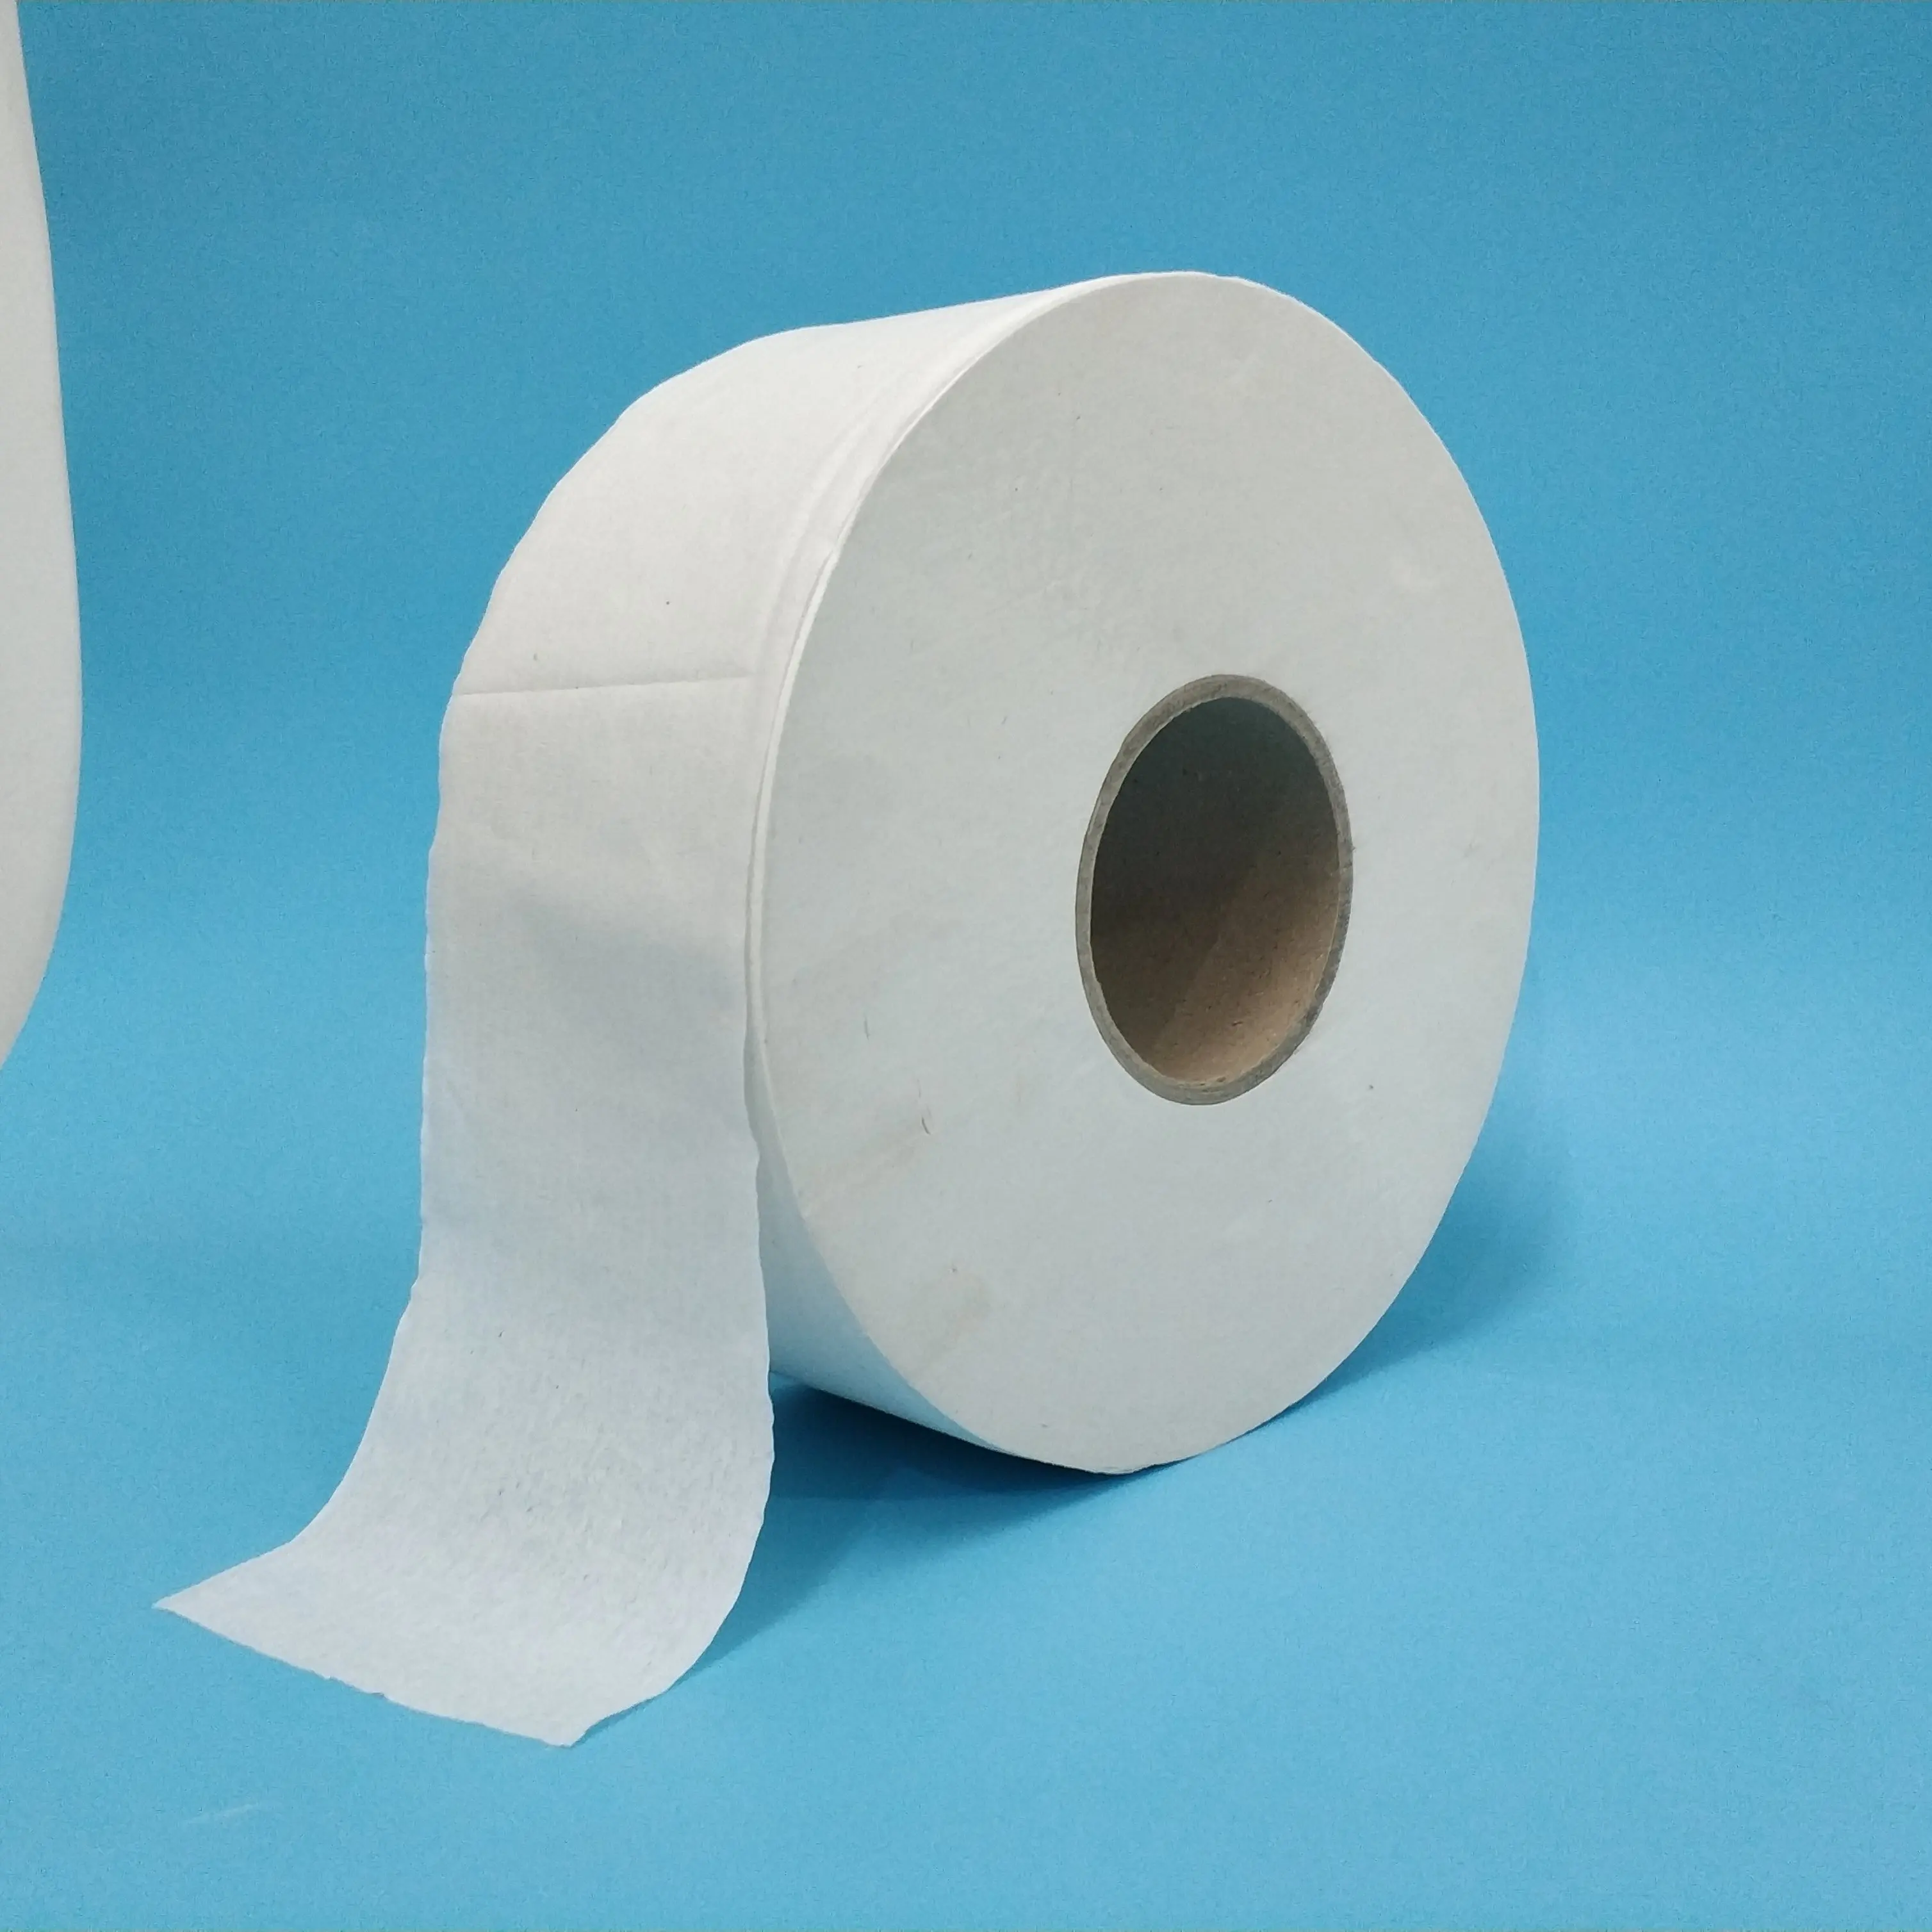 12rolls 2ply white jumbo tissue roll towels for Toilet / jumbo paper roll